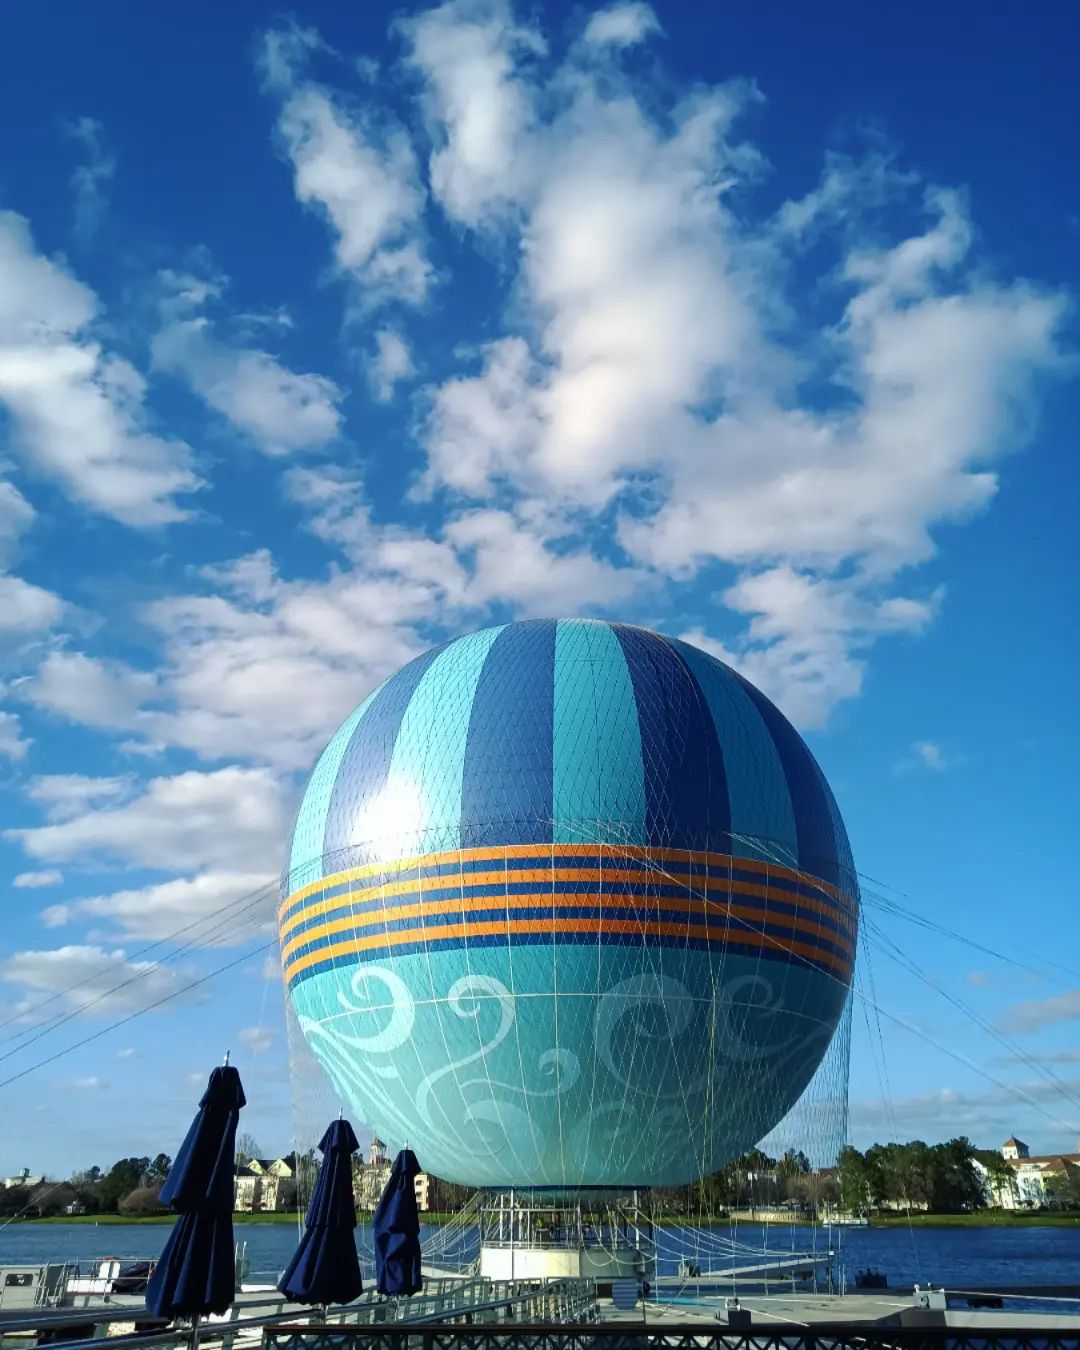 Aerophile - Disney Springs Balloon